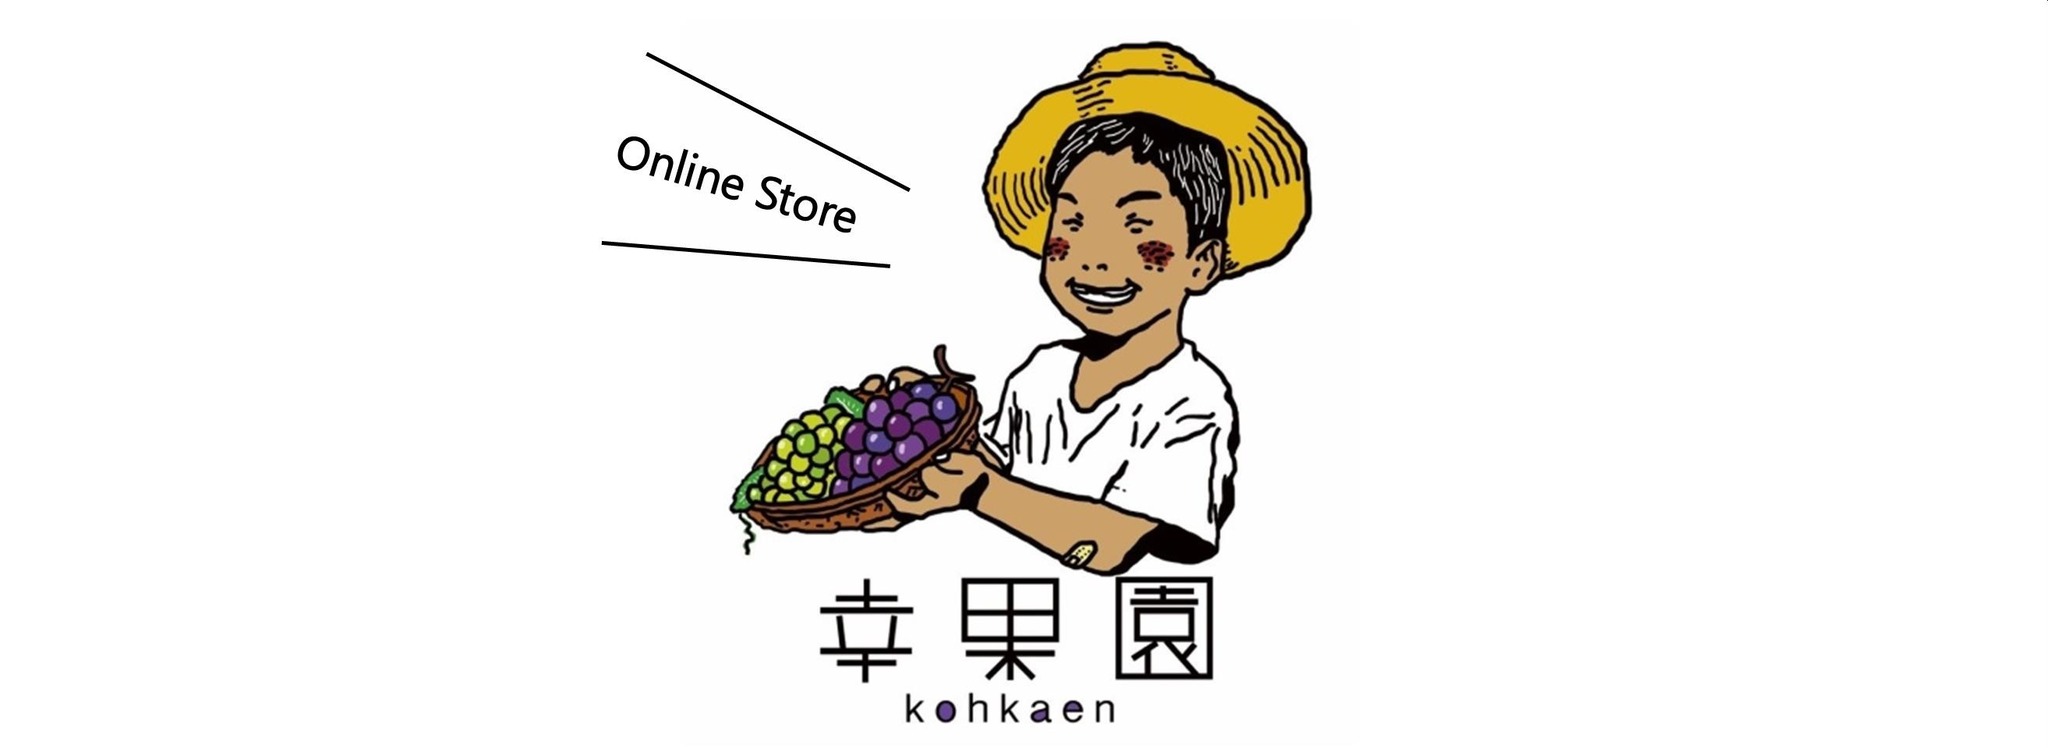 幸果園 kohkaen_online store